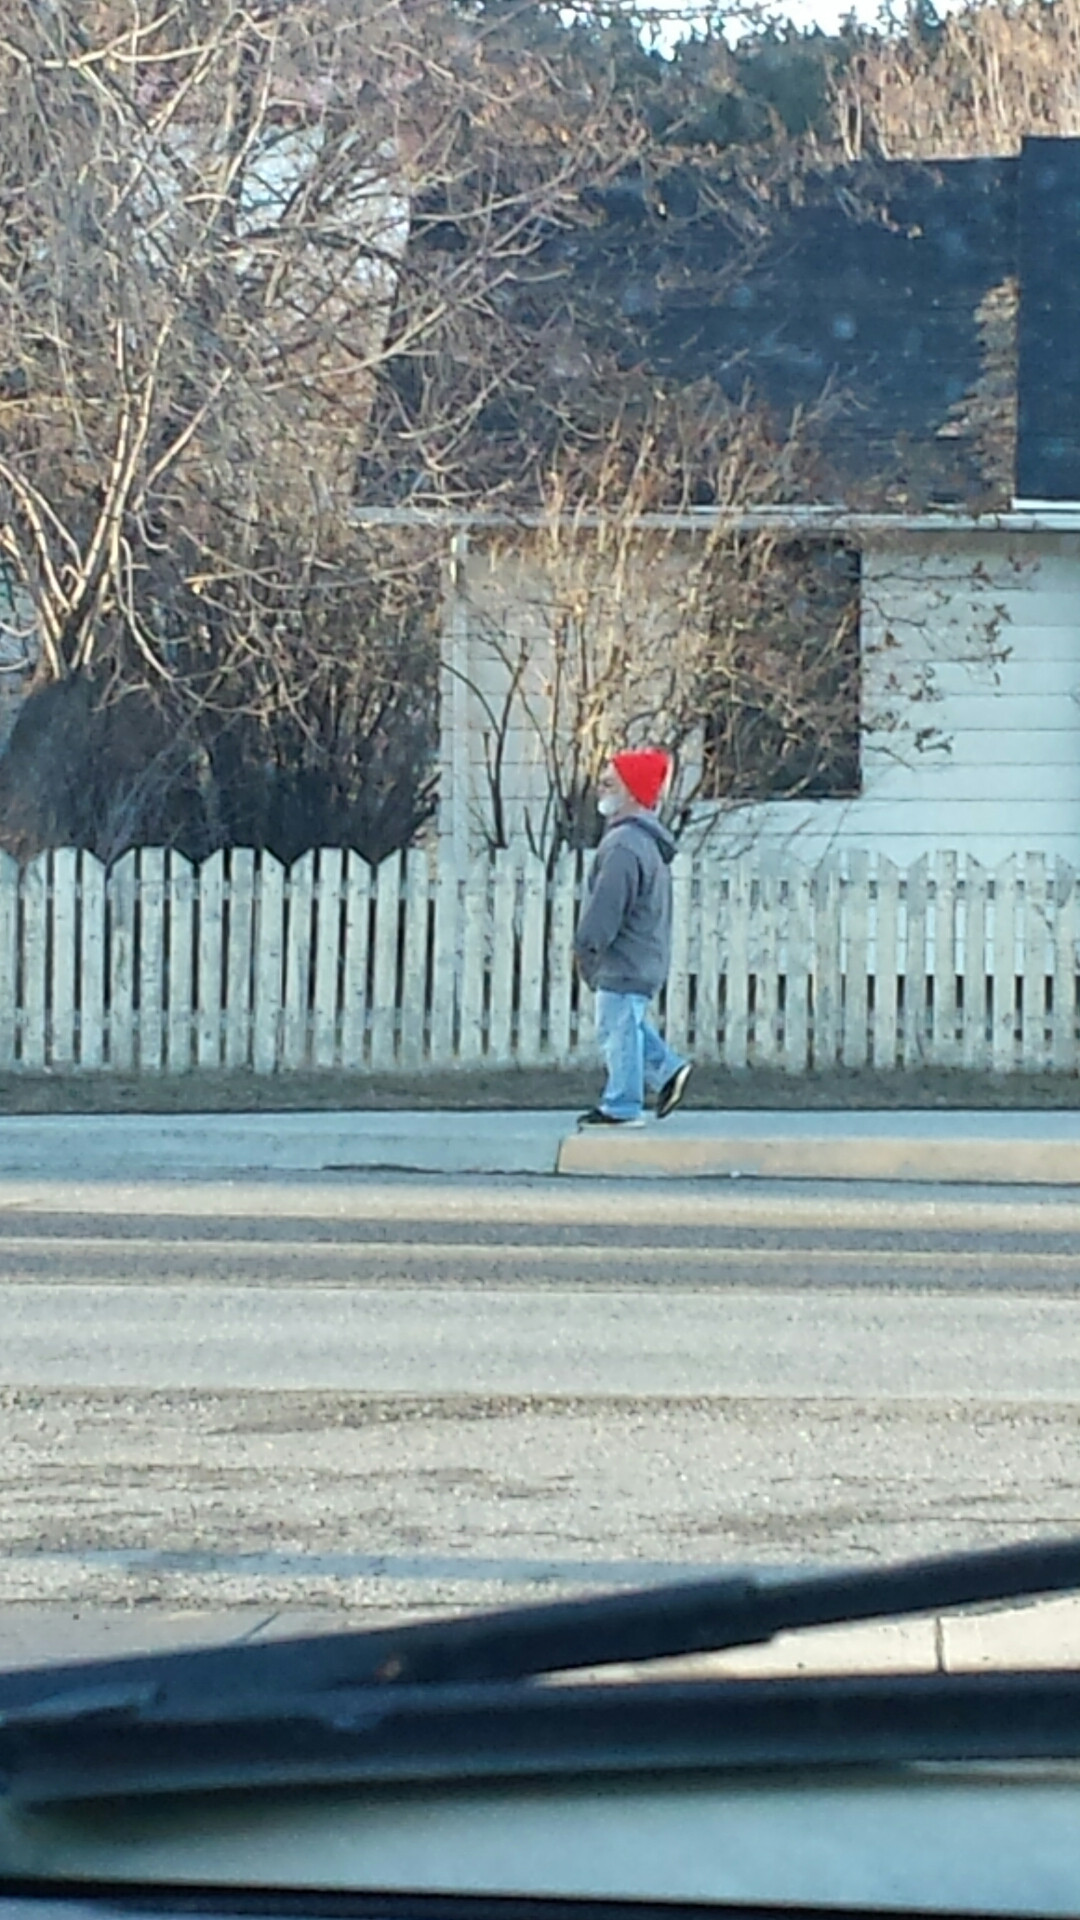 Saw a garden gnome casually walking down the street